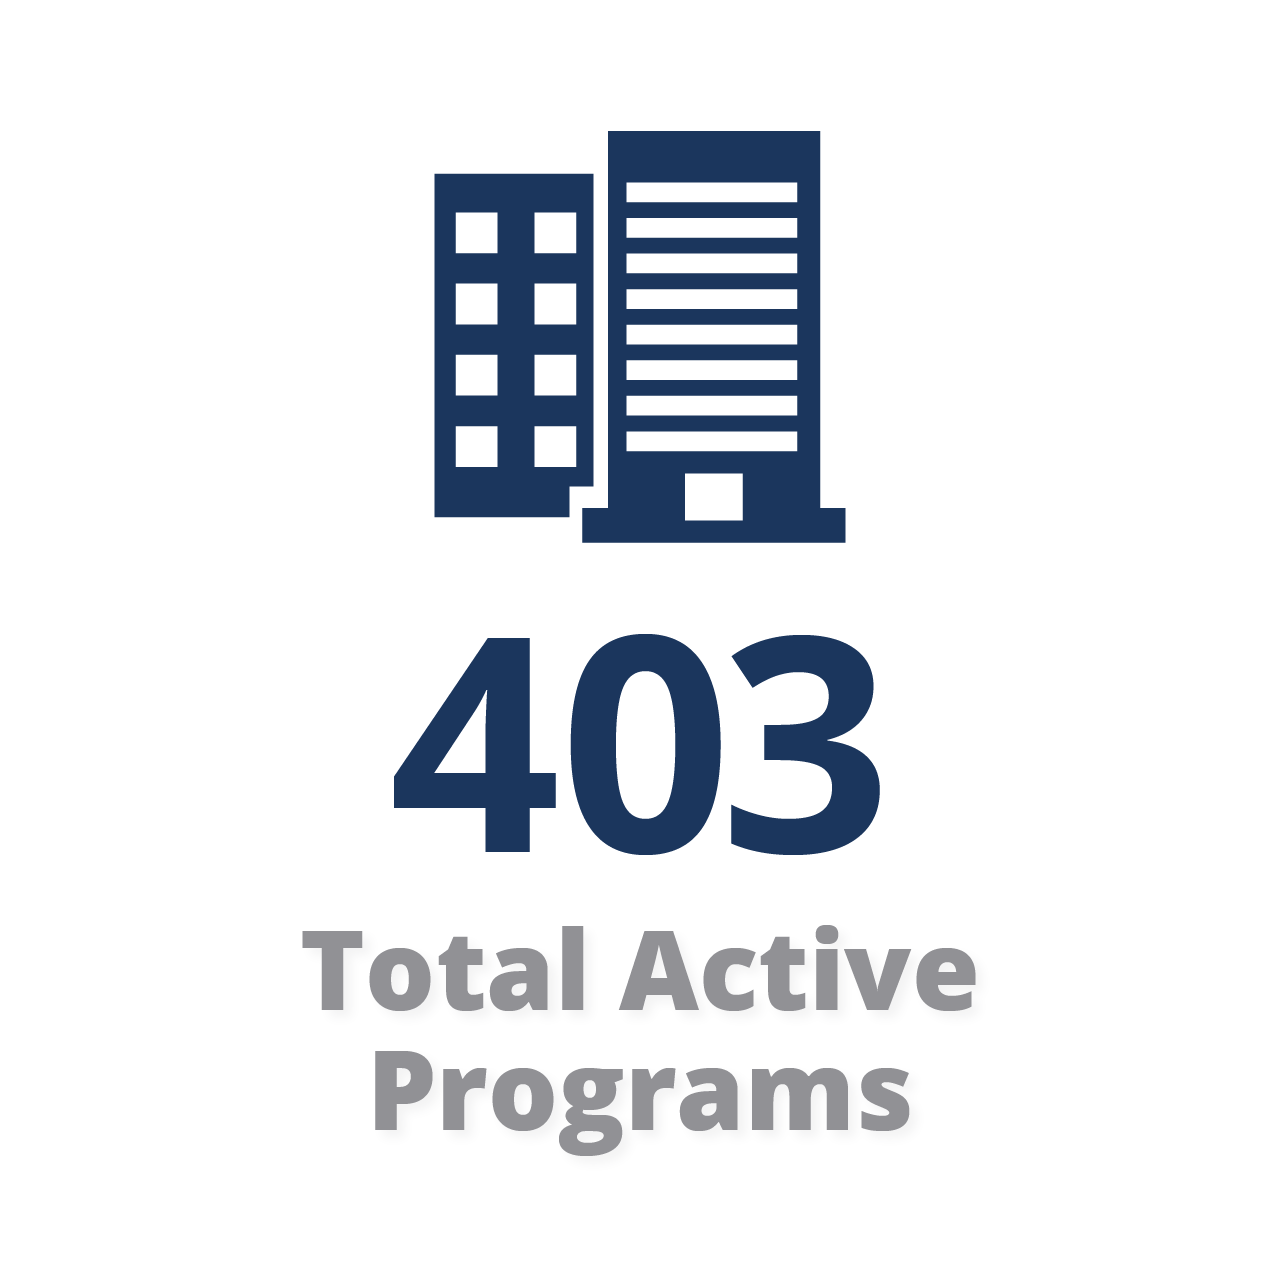 397 Total Active Programs